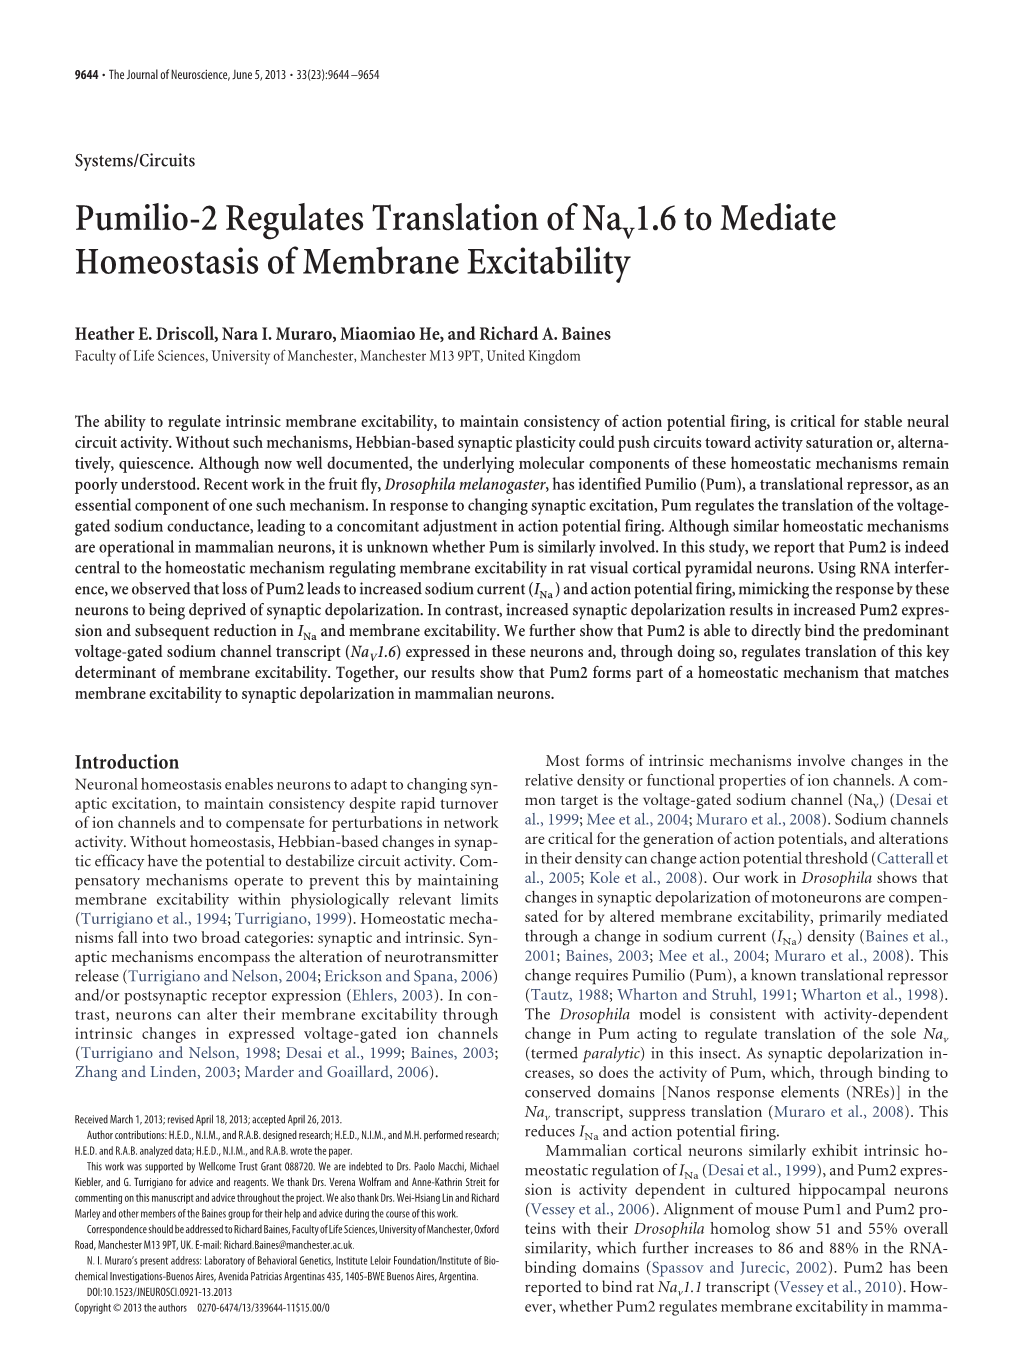 Pumilio-2 Regulates Translation of Nav 1.6 to Mediate Homeostasis Of